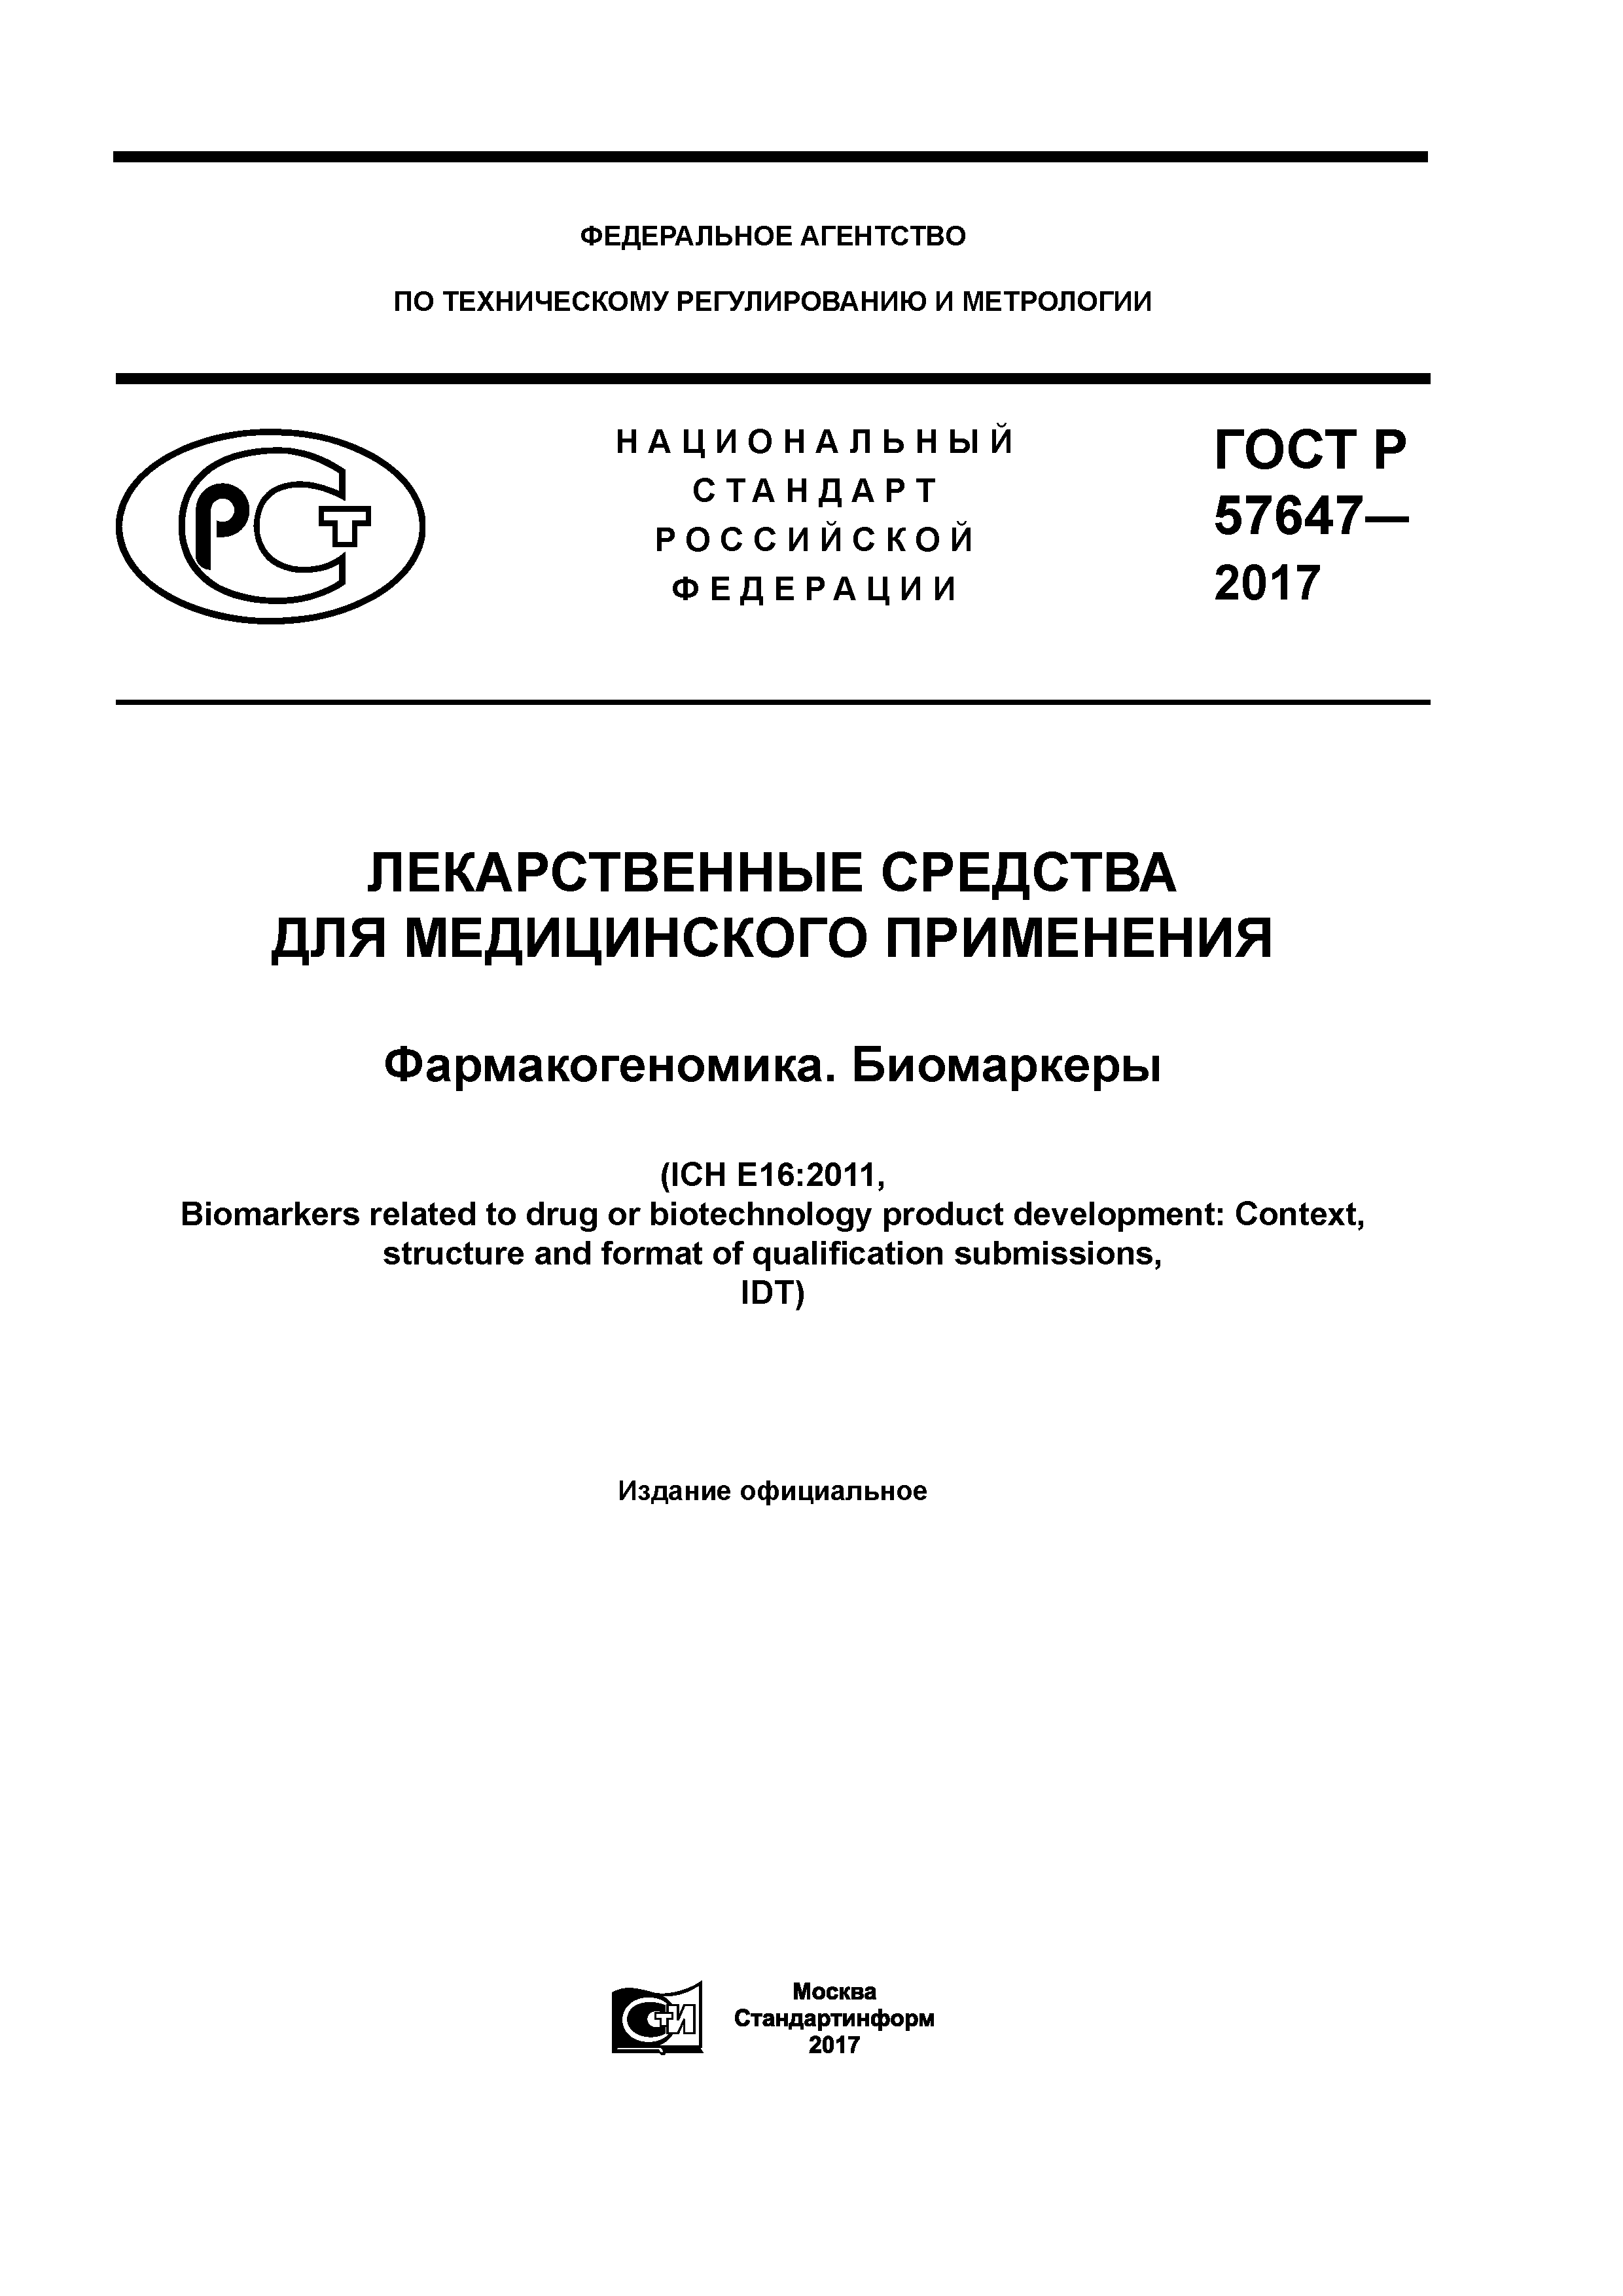 ГОСТ Р 57647-2017